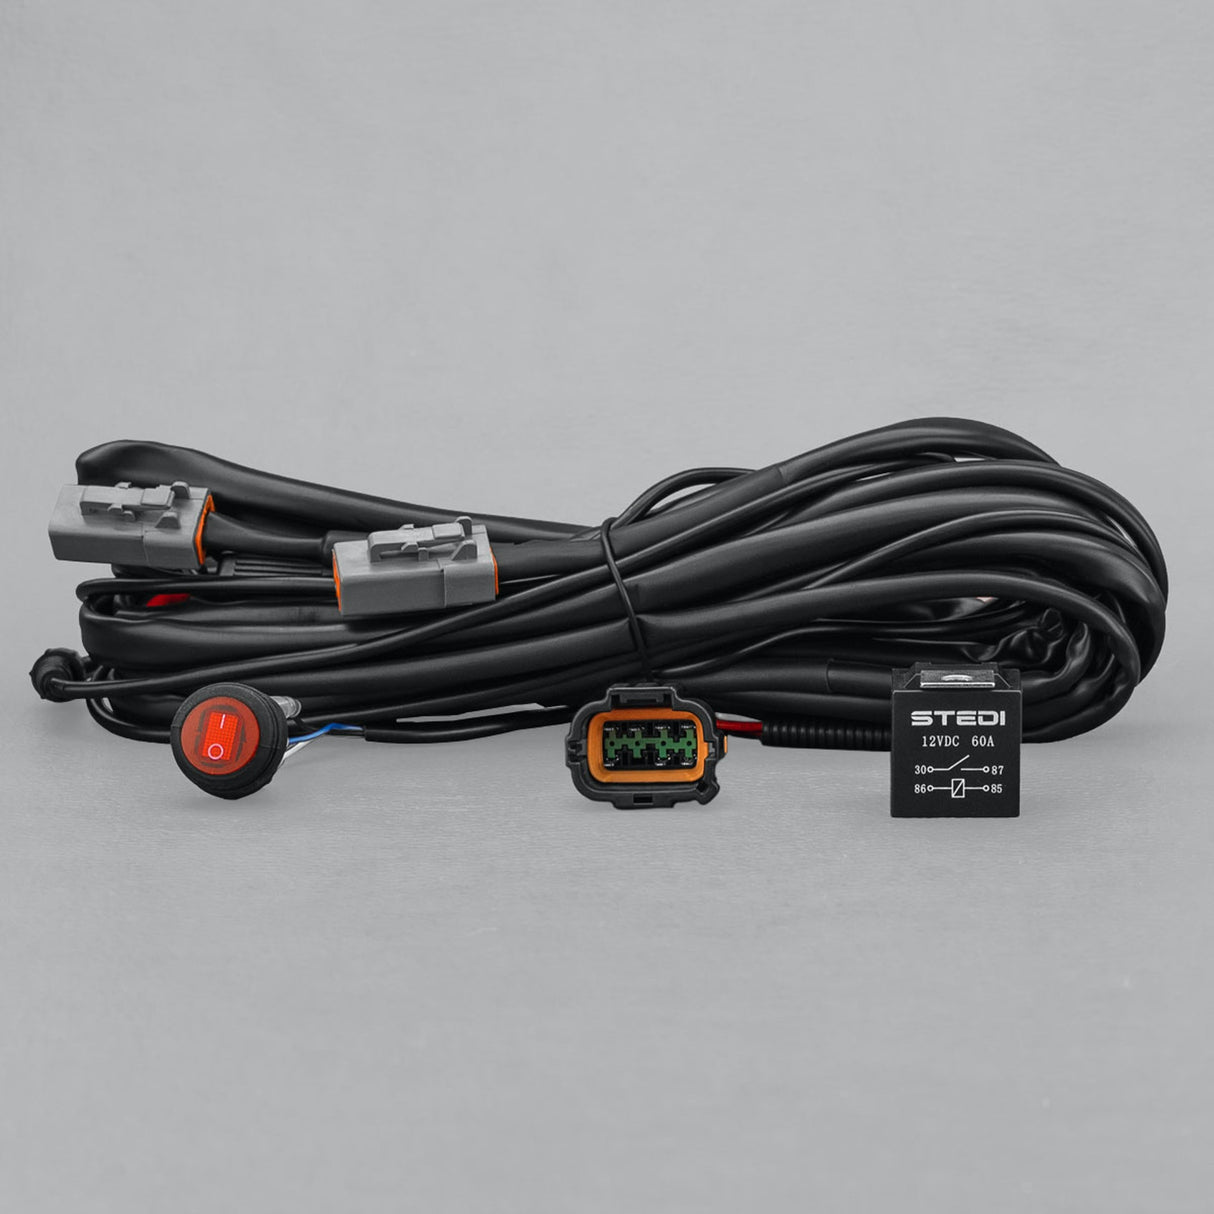 Stedi - Nissan Navara Np300 Plug And Play Wiring Harness Kit